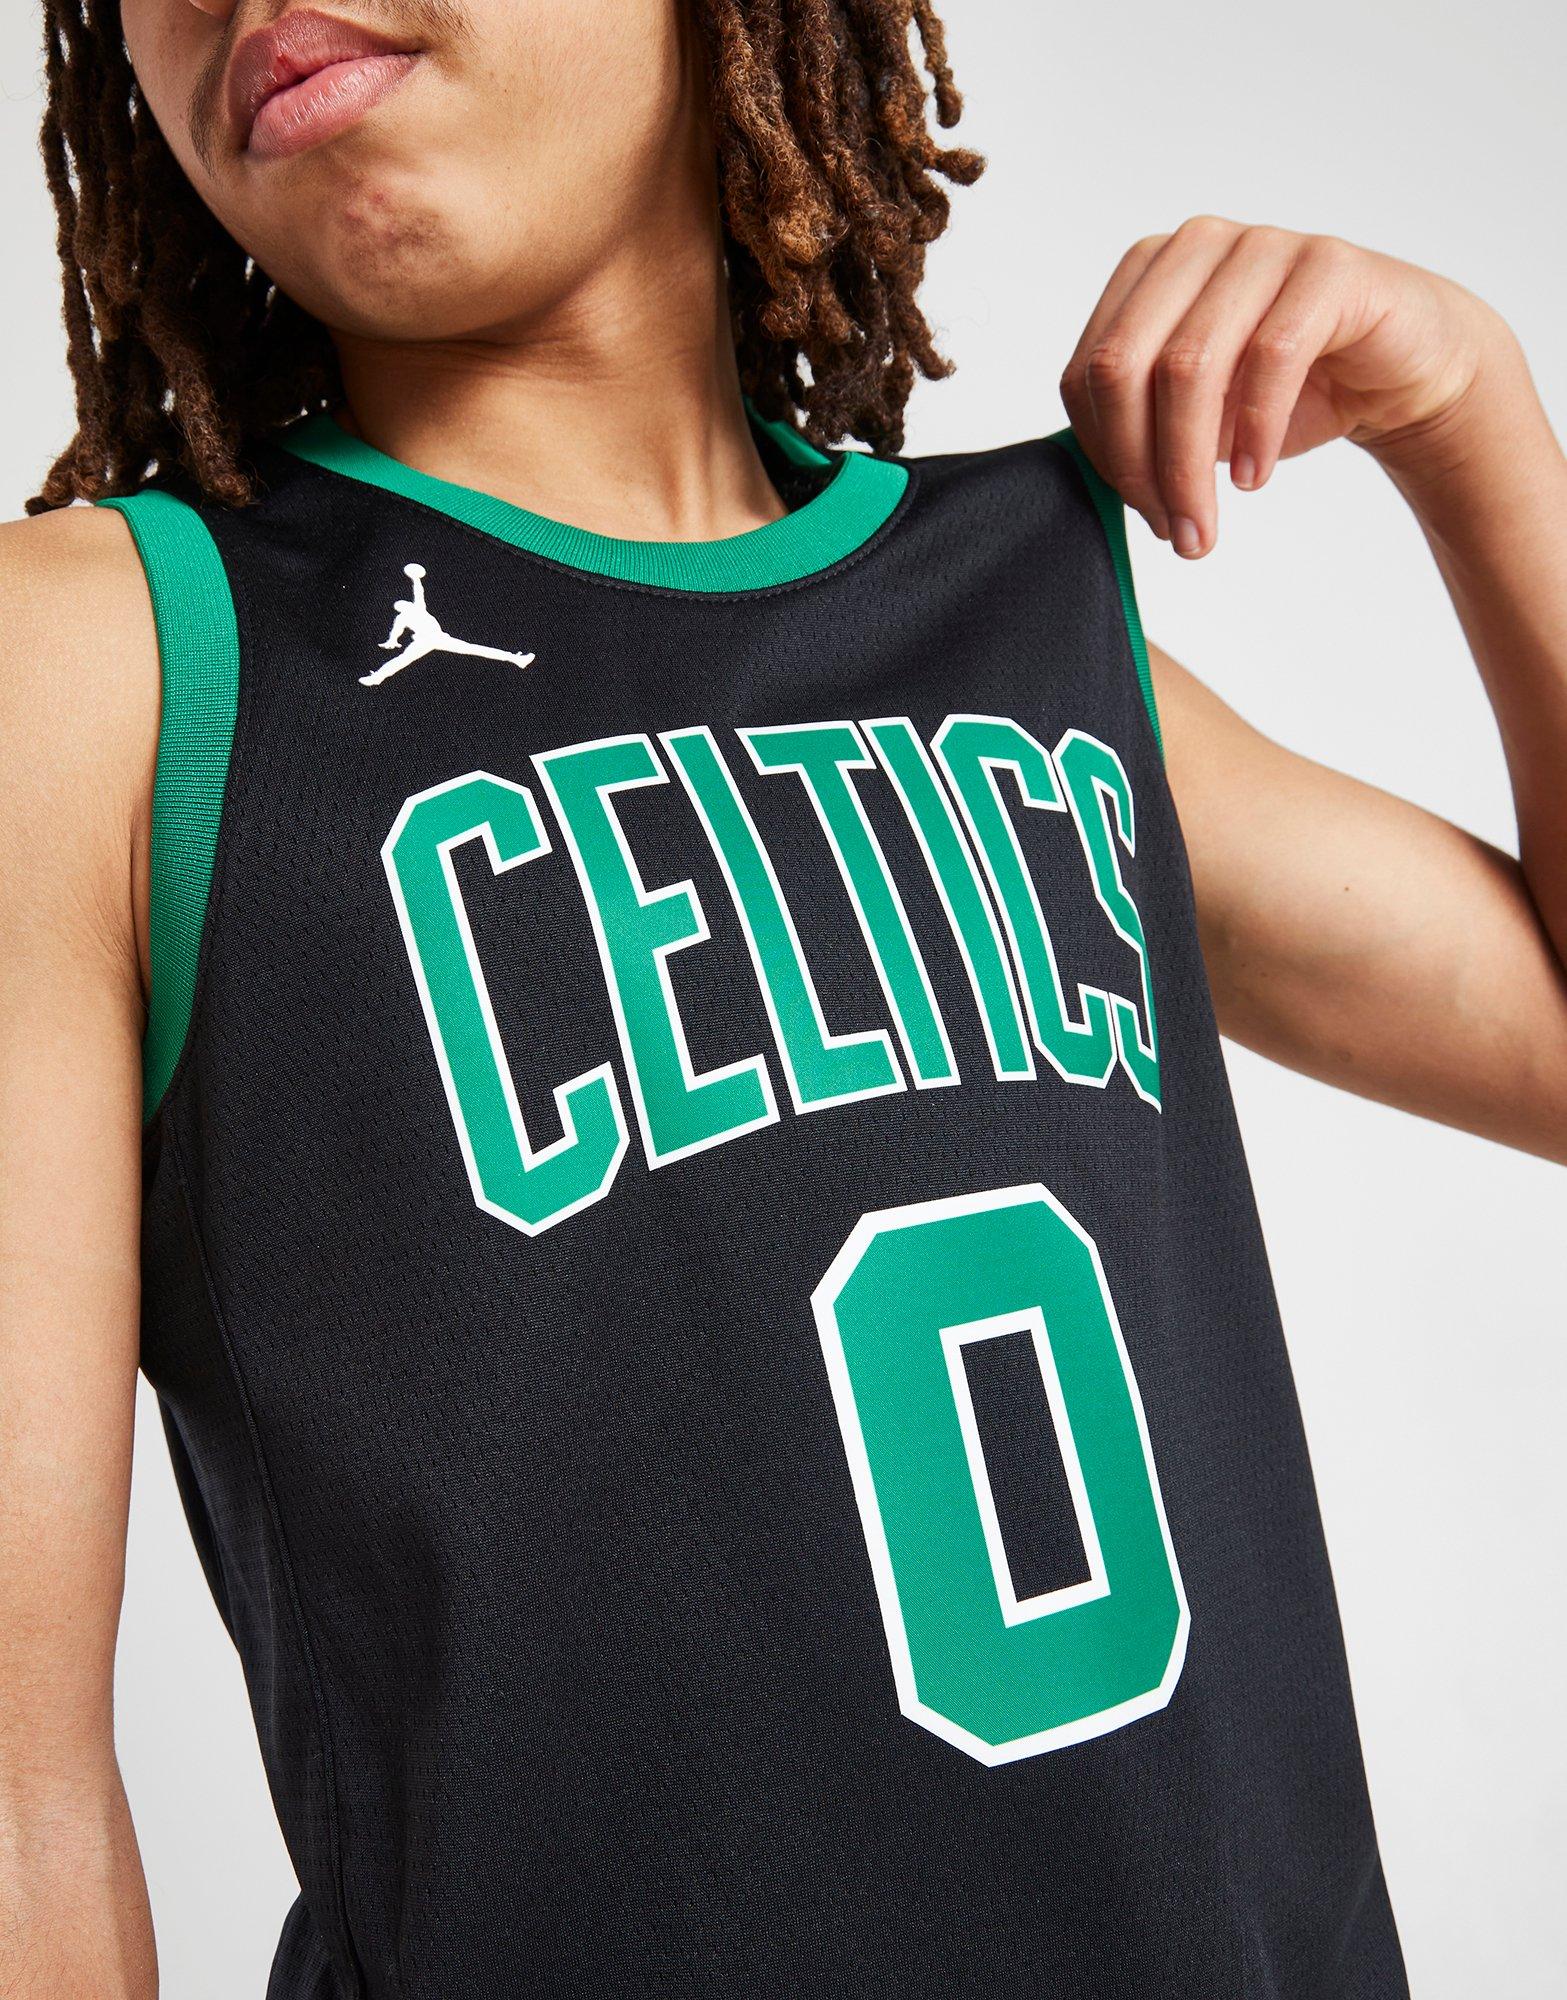 Boston Celtics City Edition Gear, Celtics 22/23 City Jerseys, Hoodies,  Shirts, Apparel